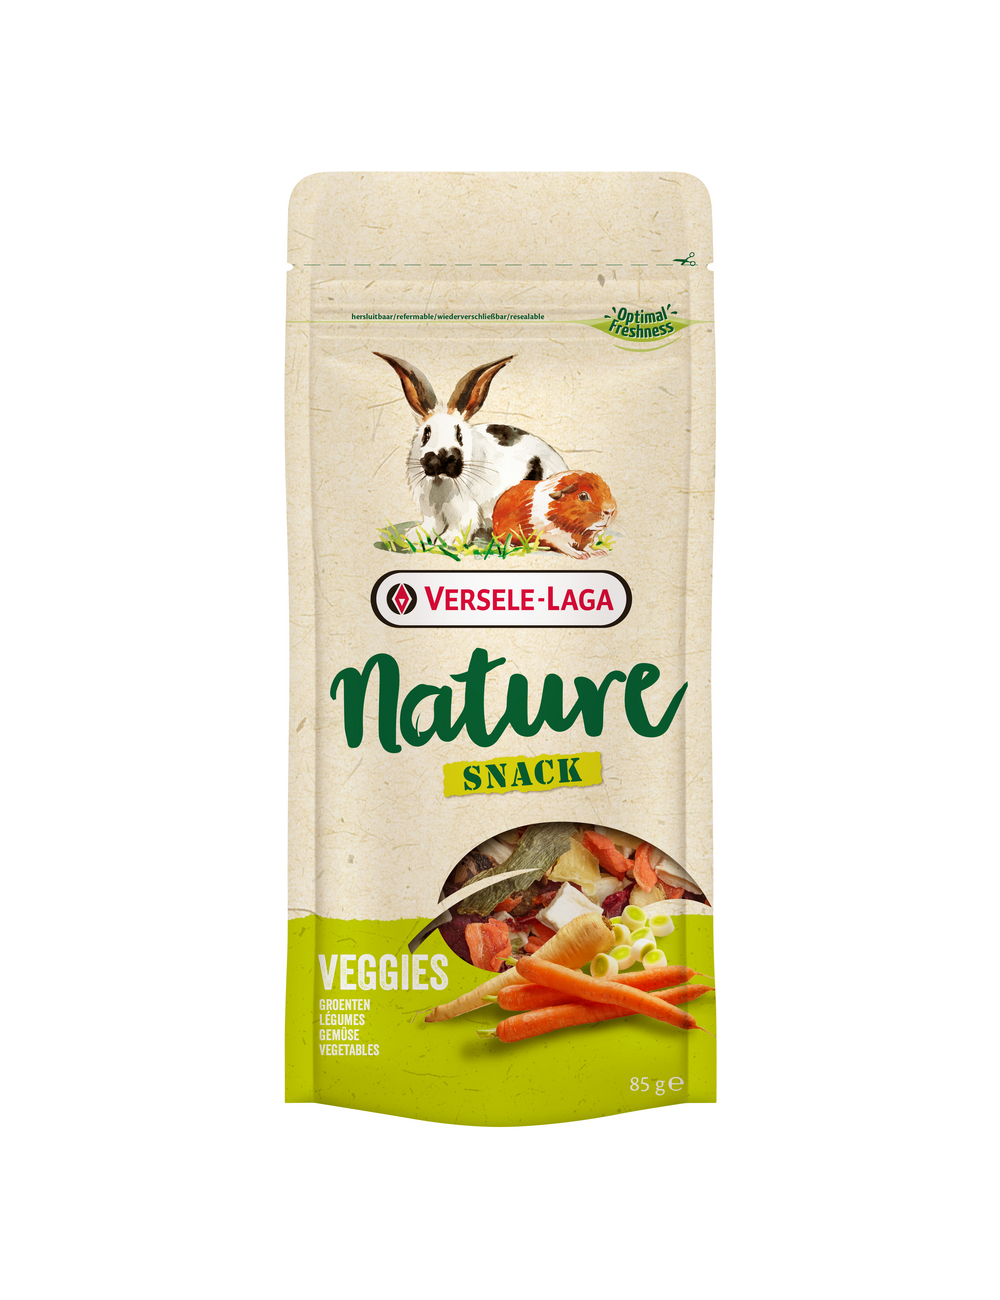 VERSELE LAGA - Nature Snack Veggies